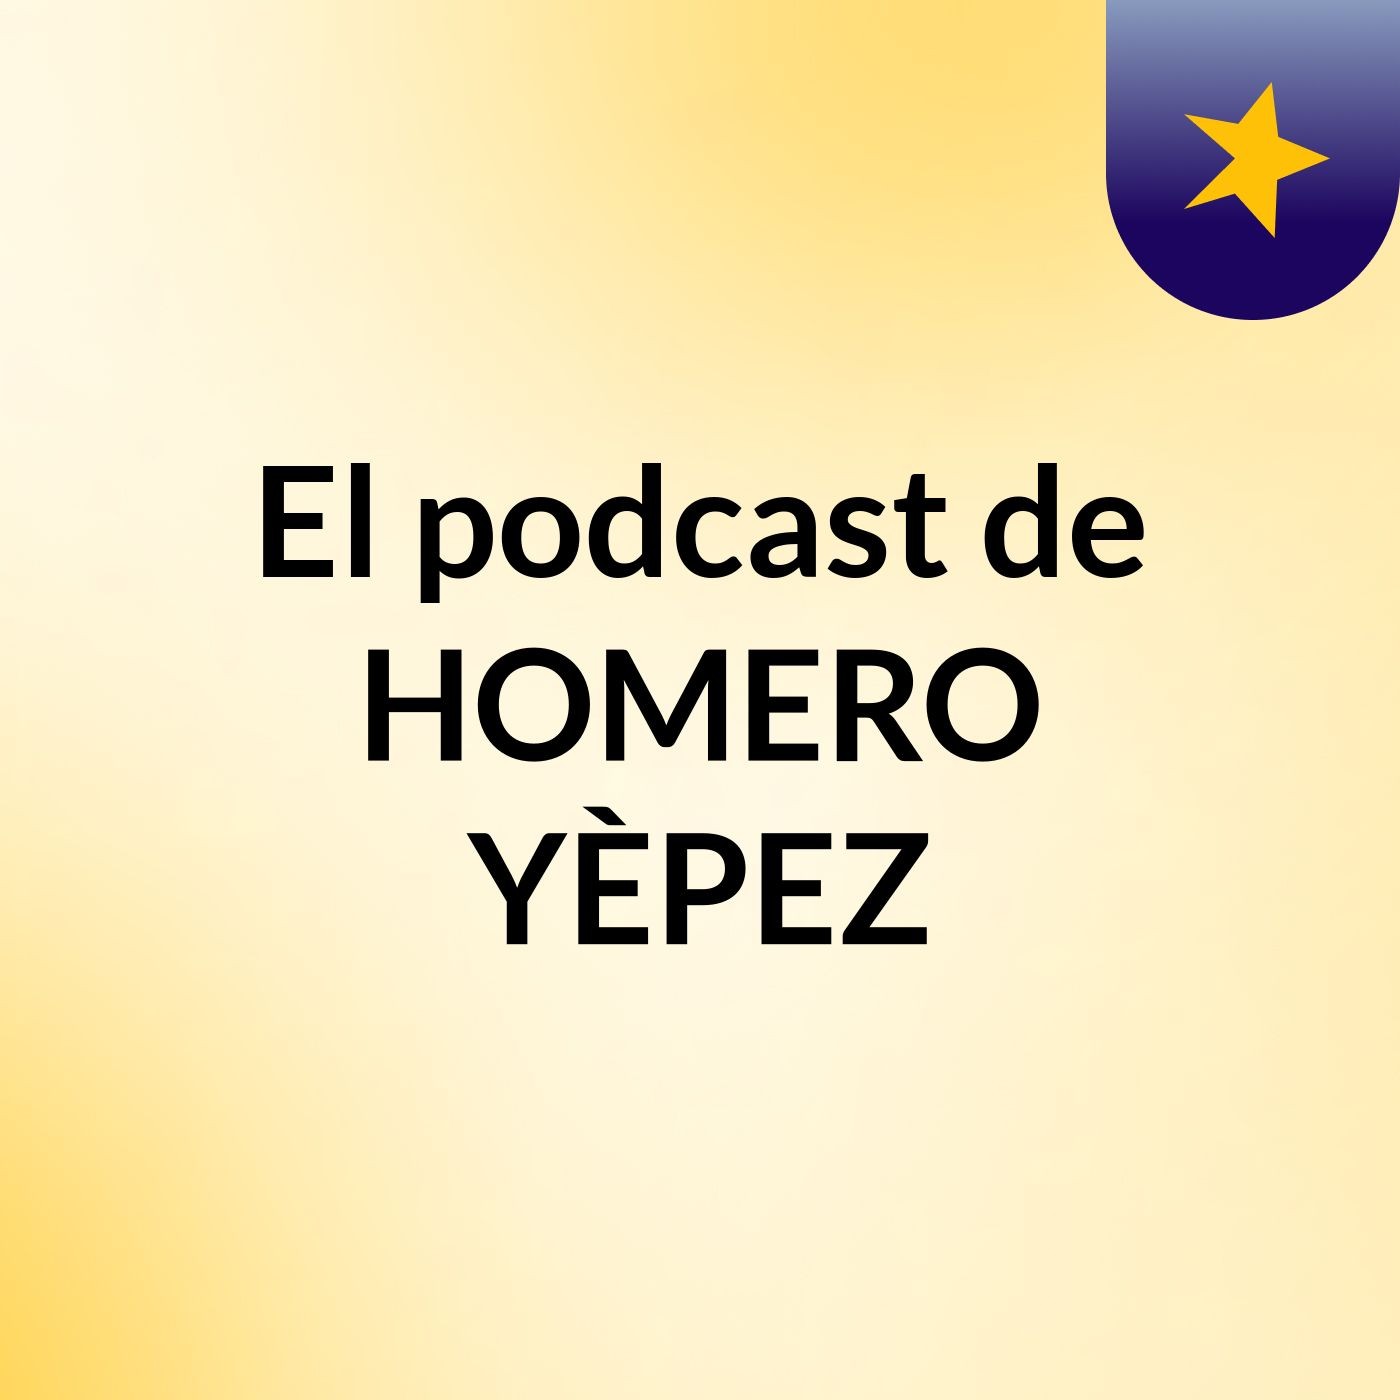 Episodio 3 - El podcast de HOMERO YÈPEZ